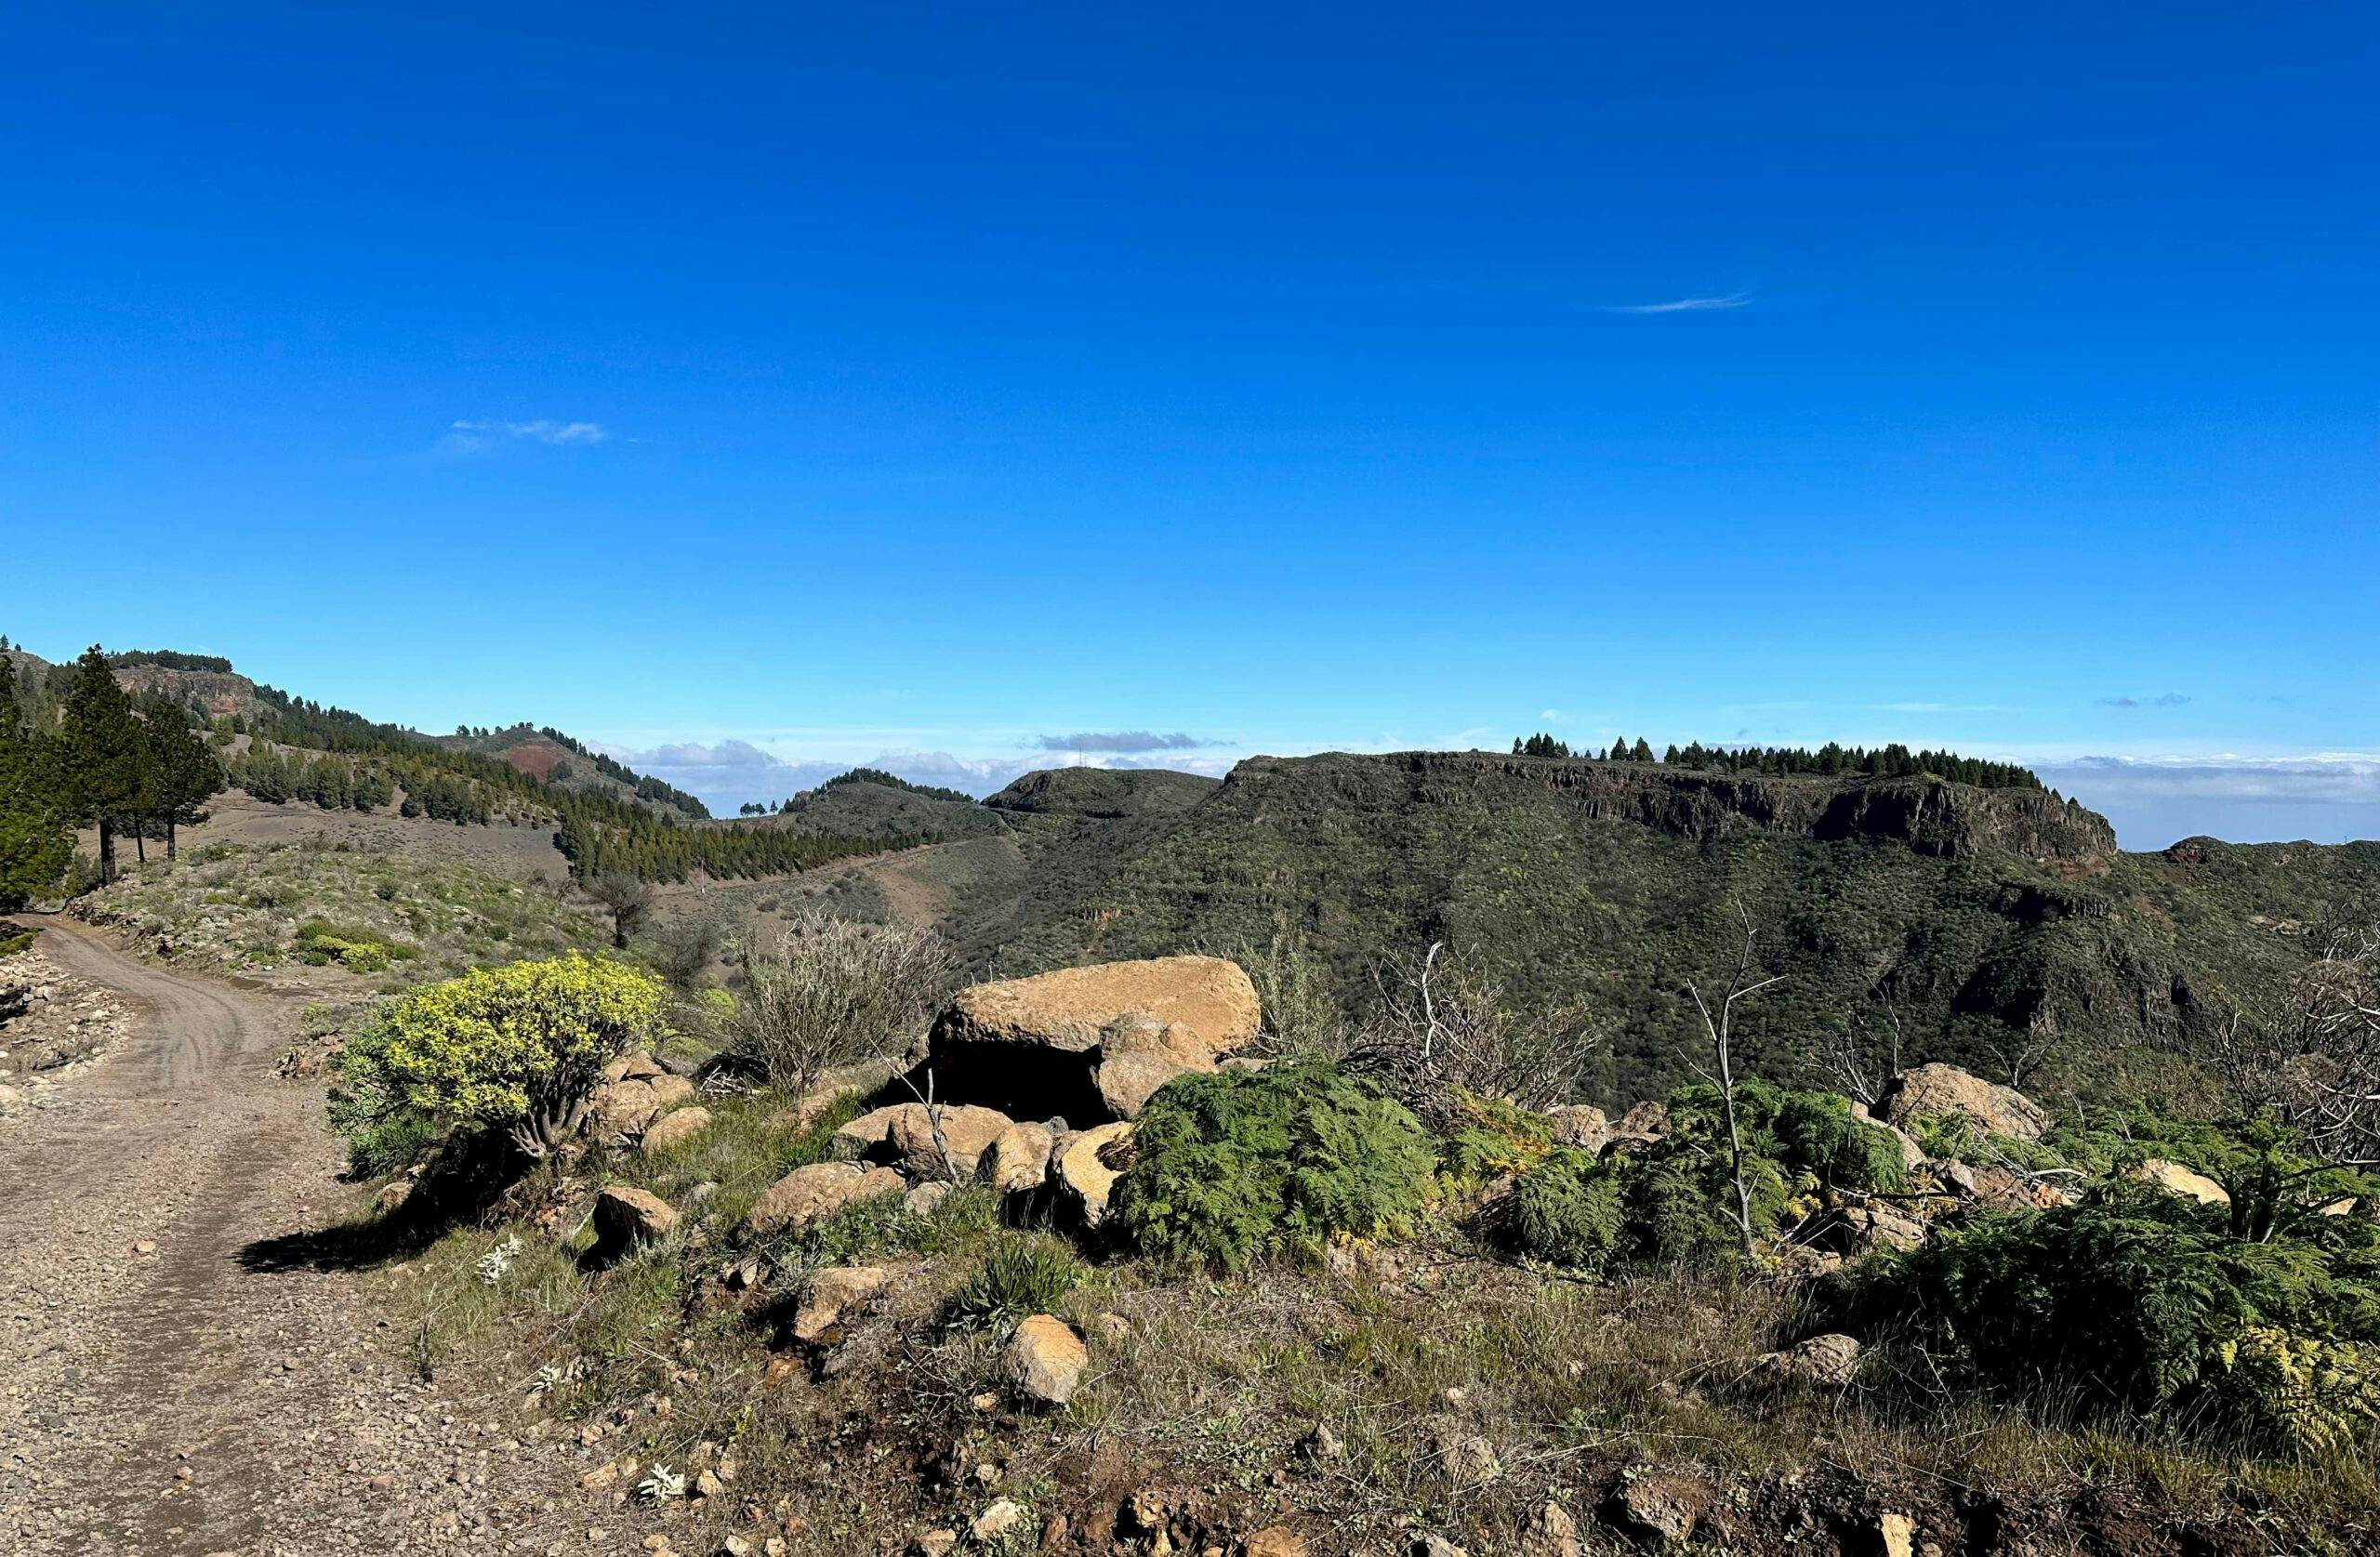 View from the Cumbre to the Caldera de Martelas